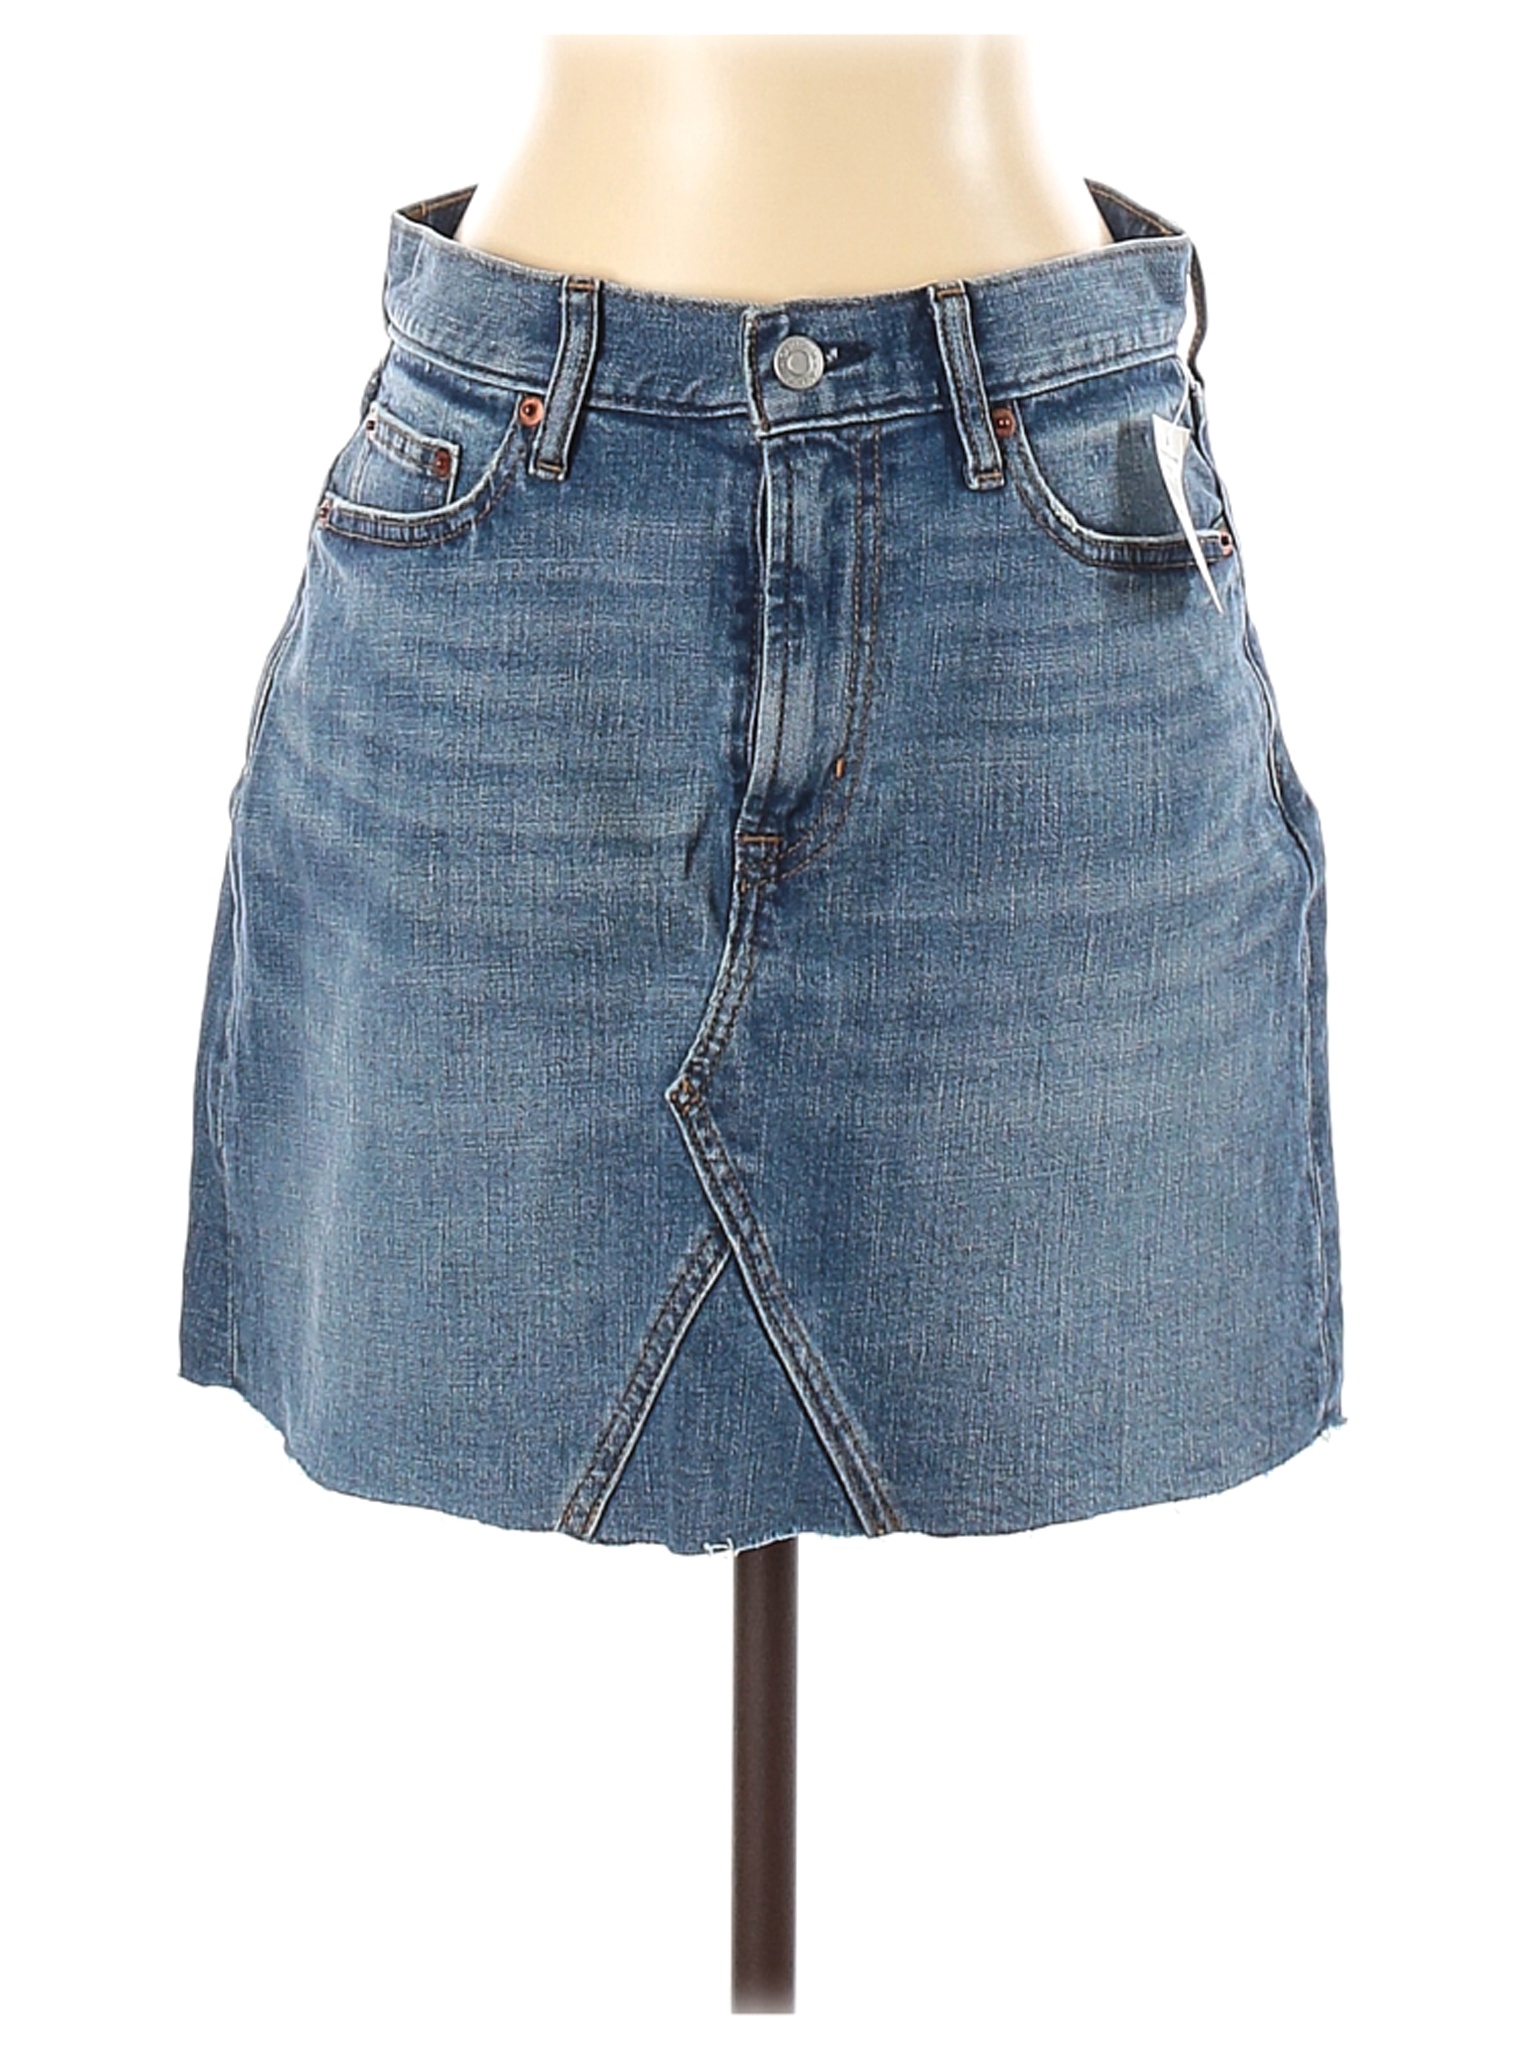 NWT Gap Women Blue Denim Skirt 27W | eBay